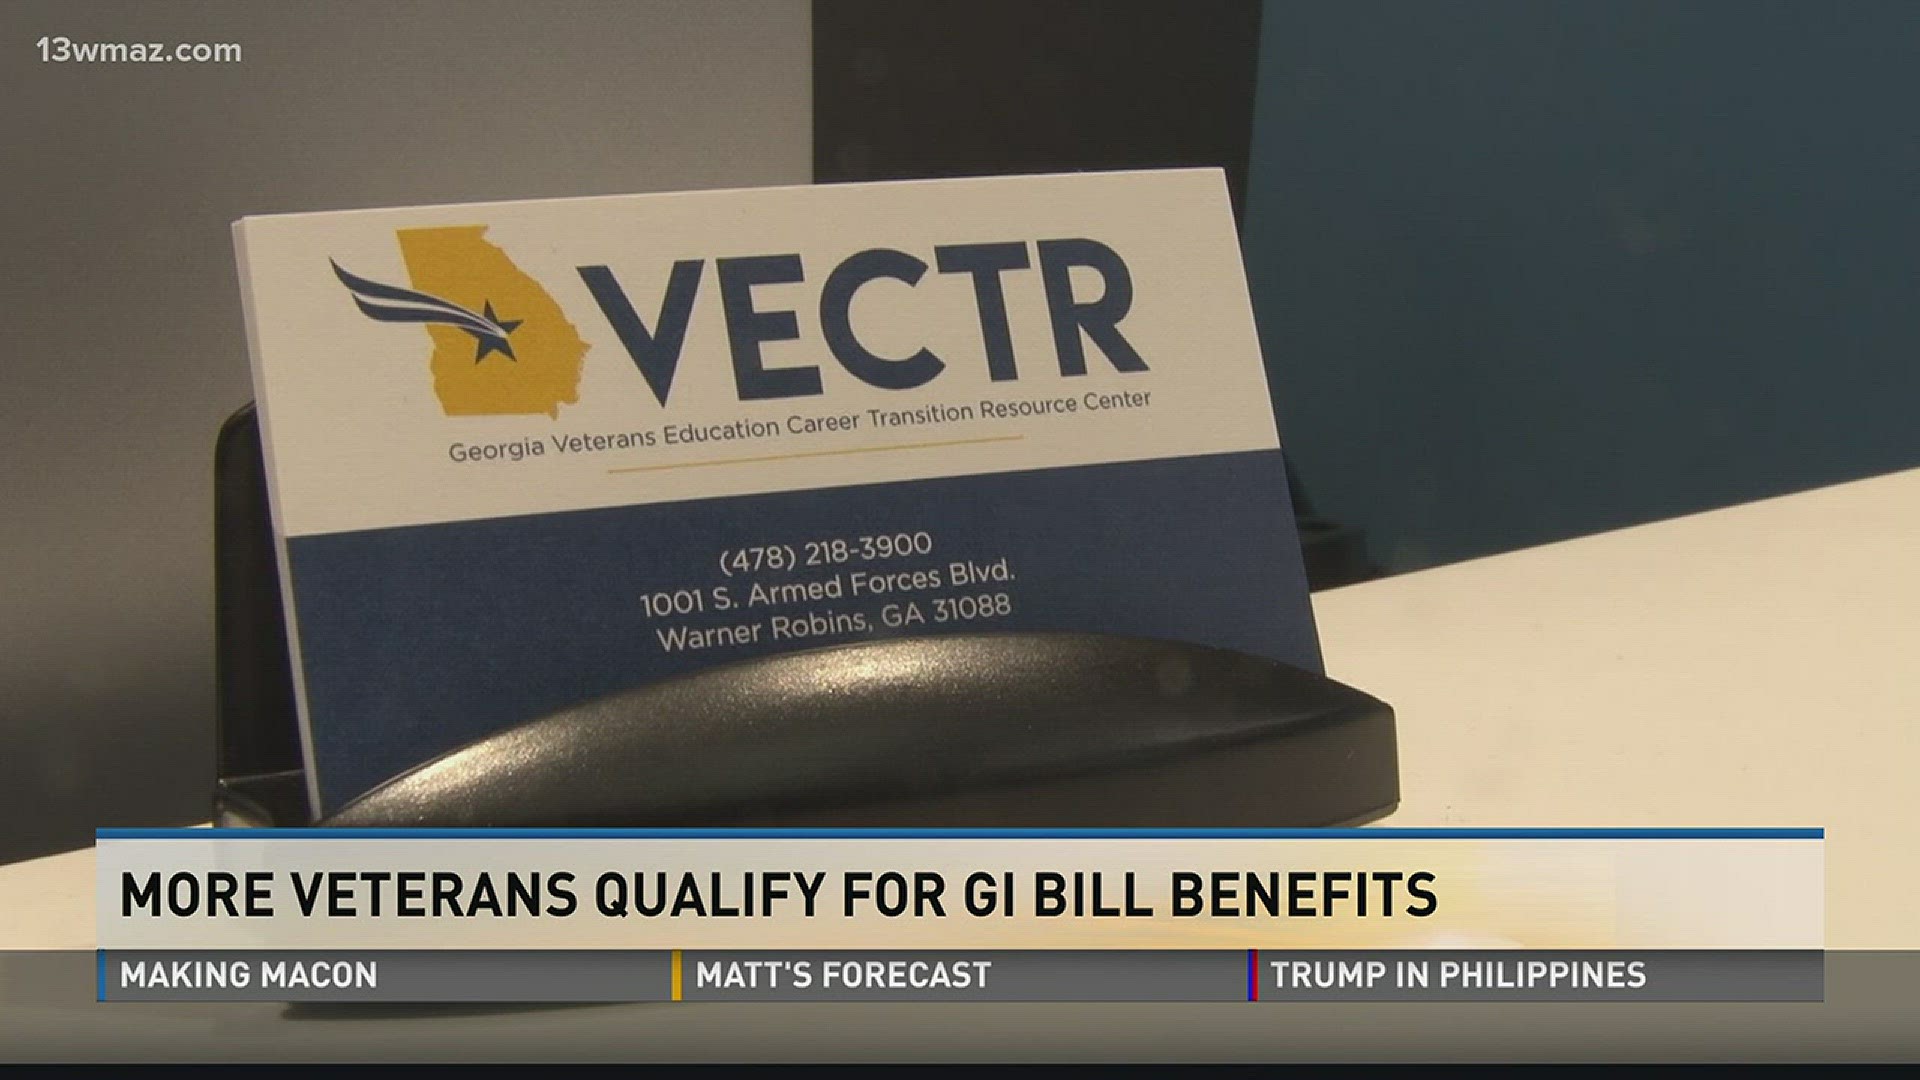 More veterans qualify for GI Bill benefits